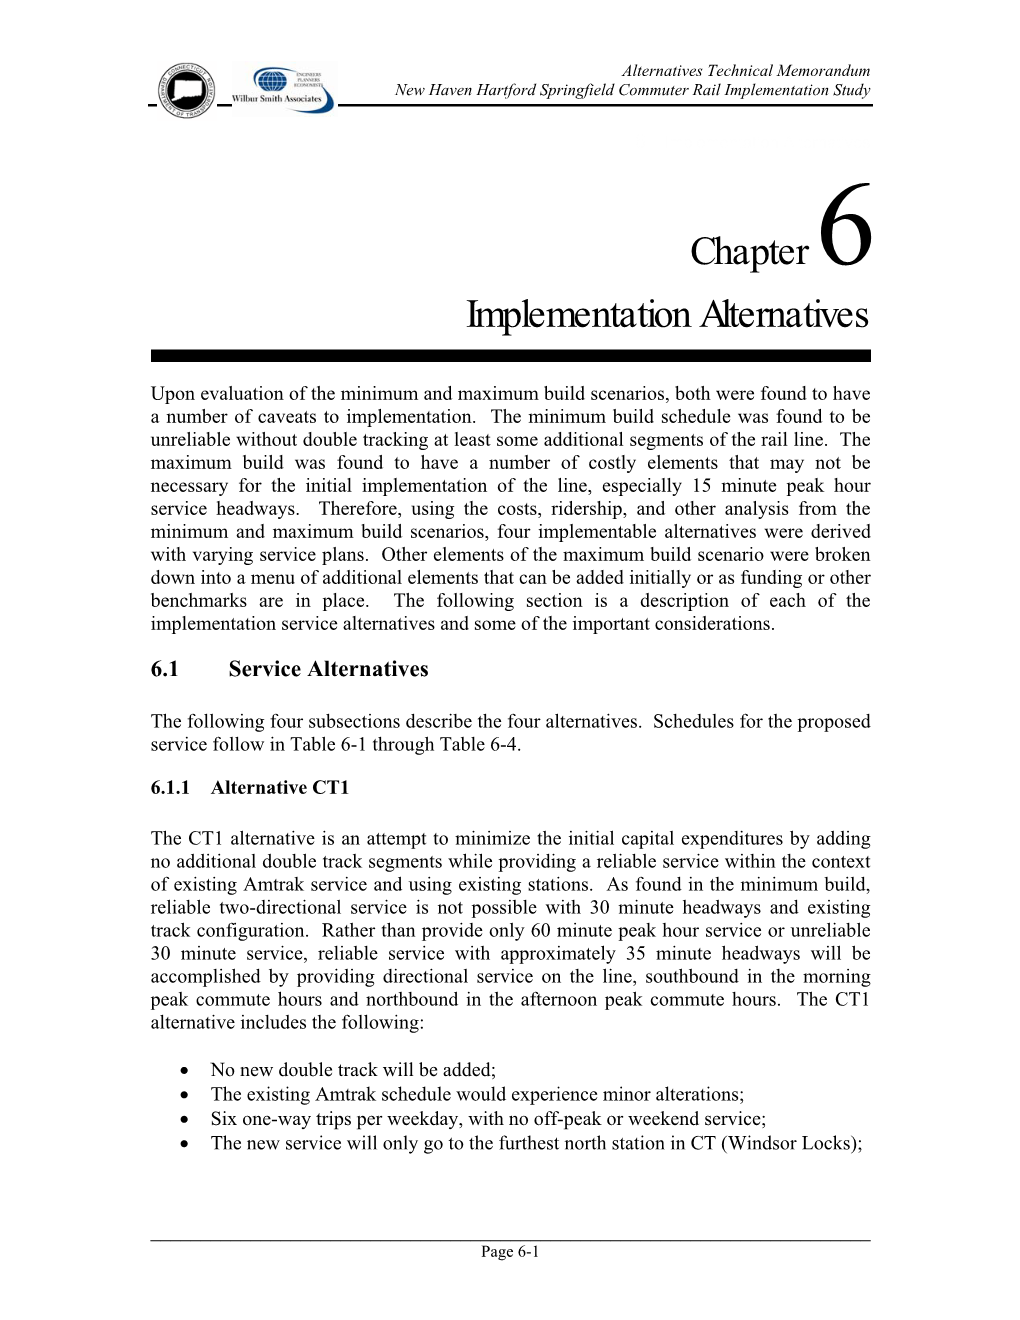 Chapter 6 Implementation Alternatives